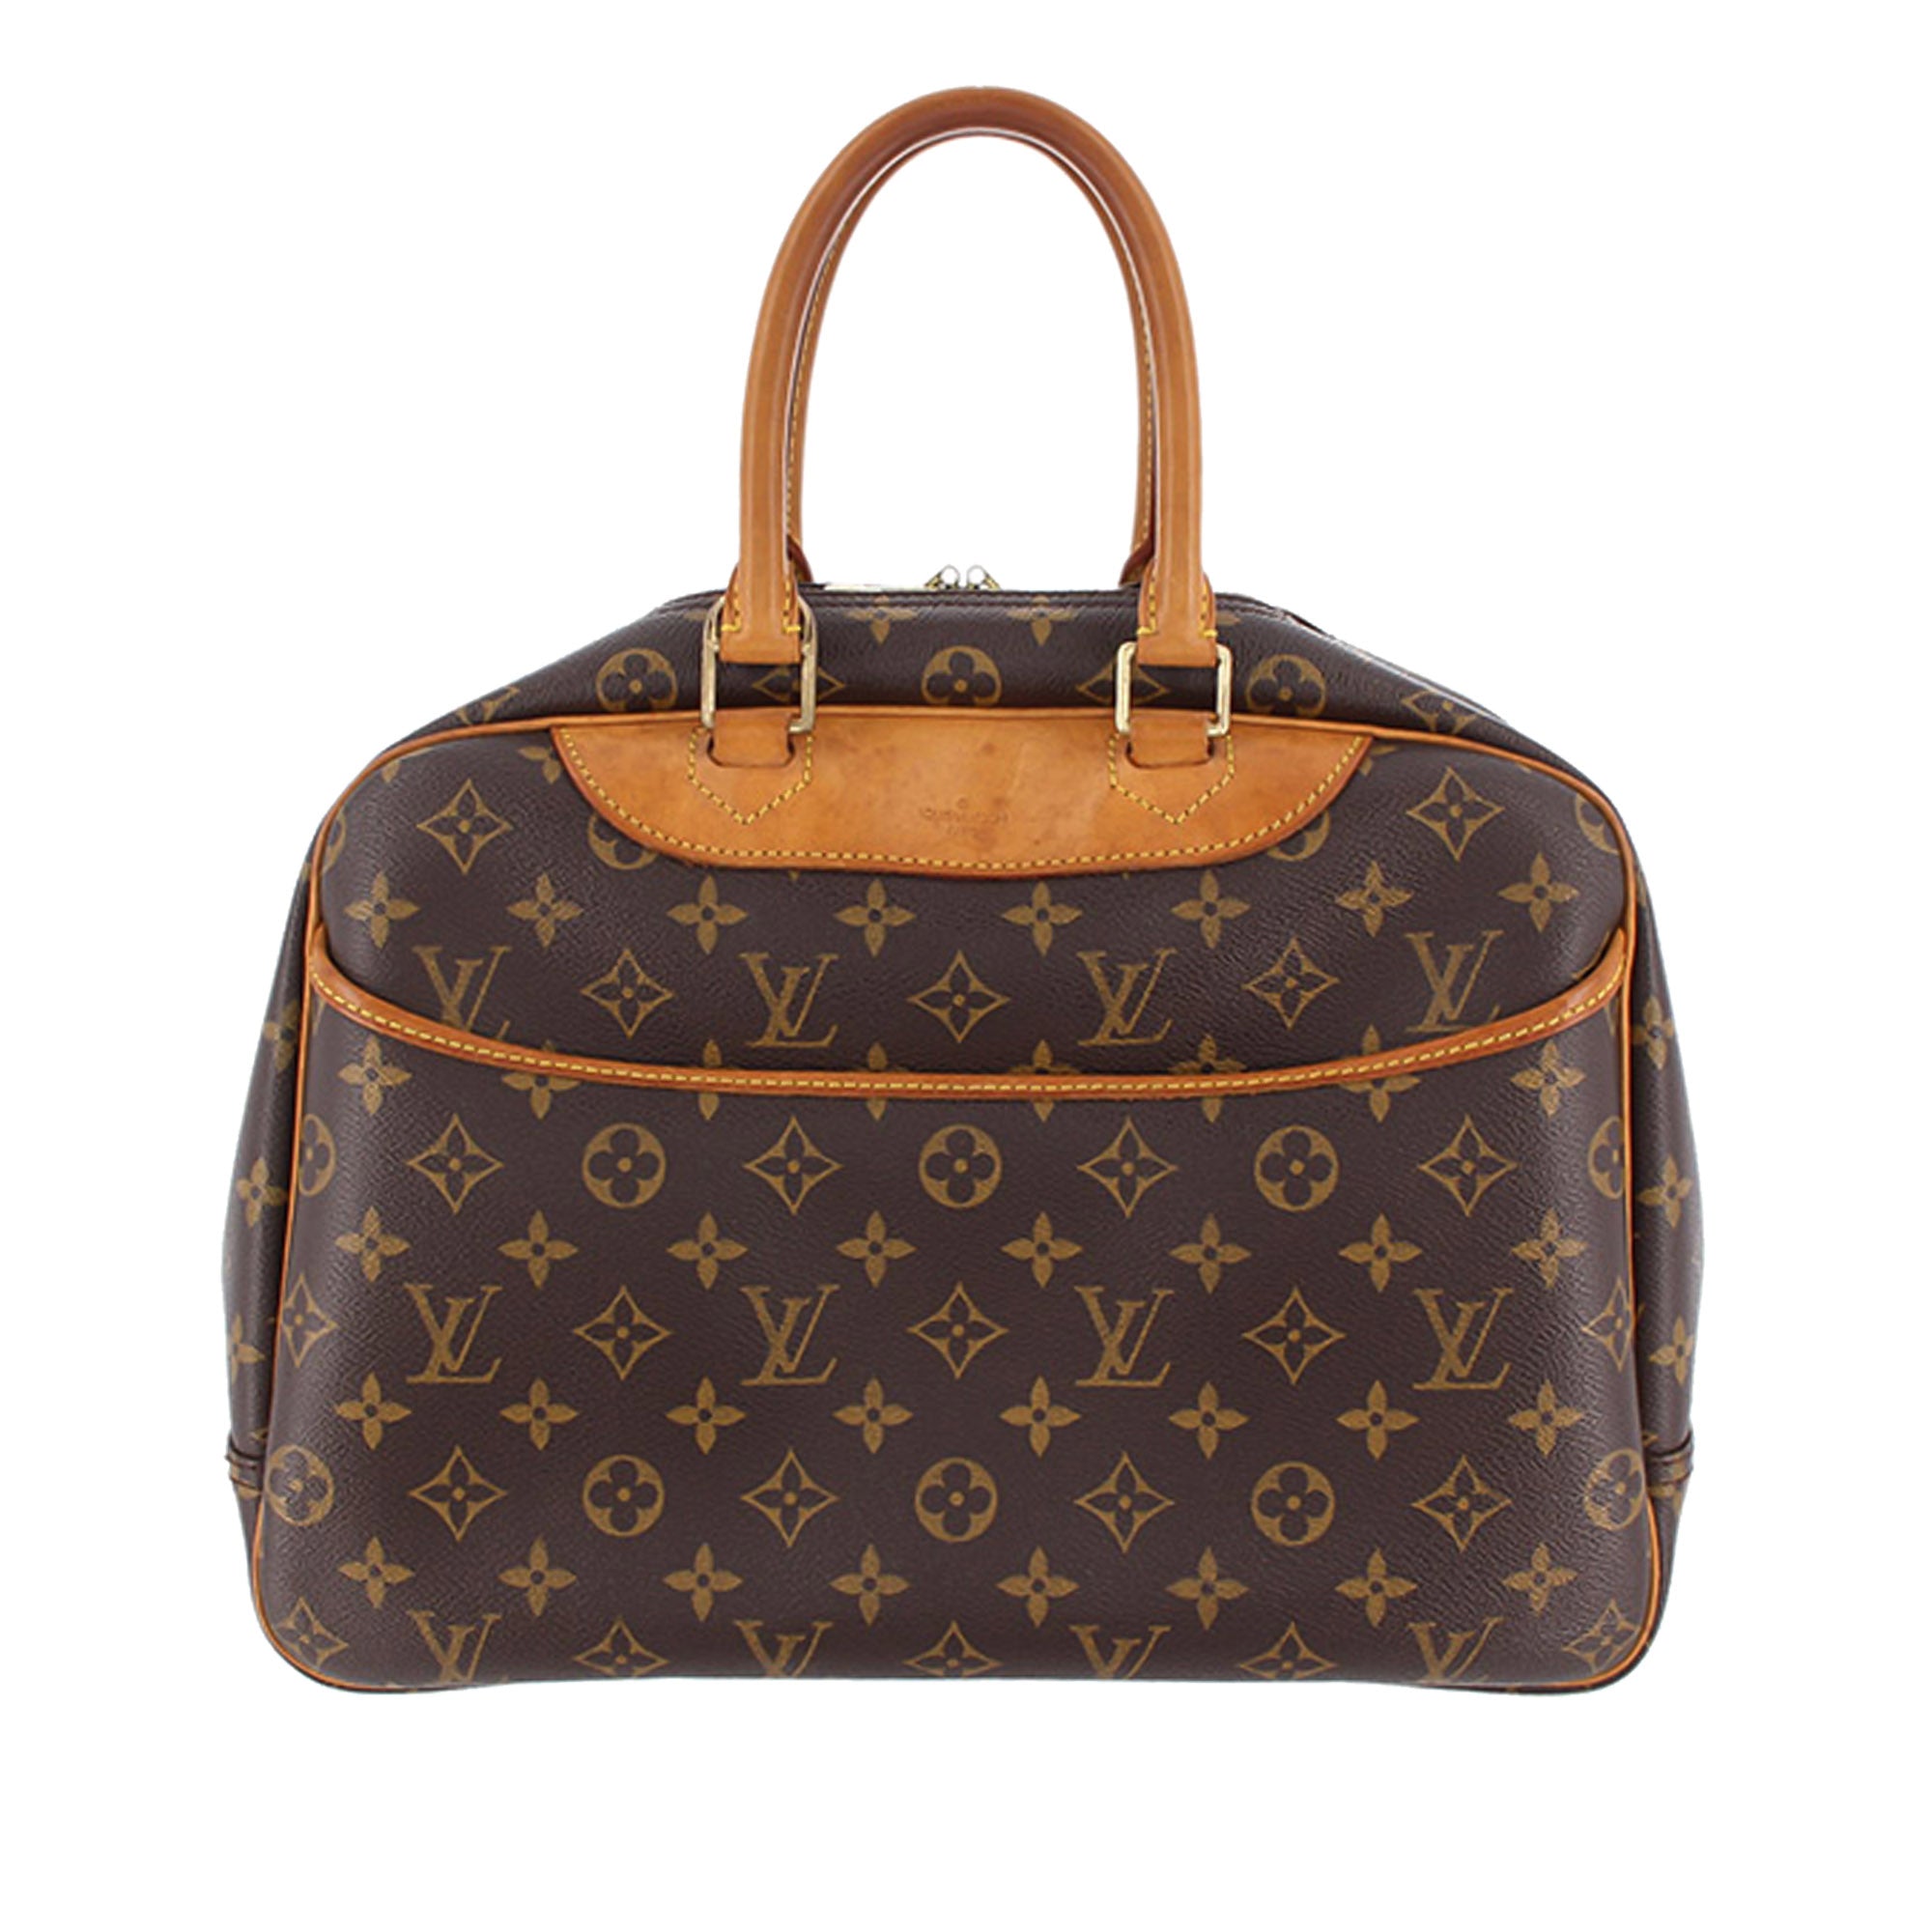 Louis Vuitton Leather Exterior Gold Bags & Handbags for Women